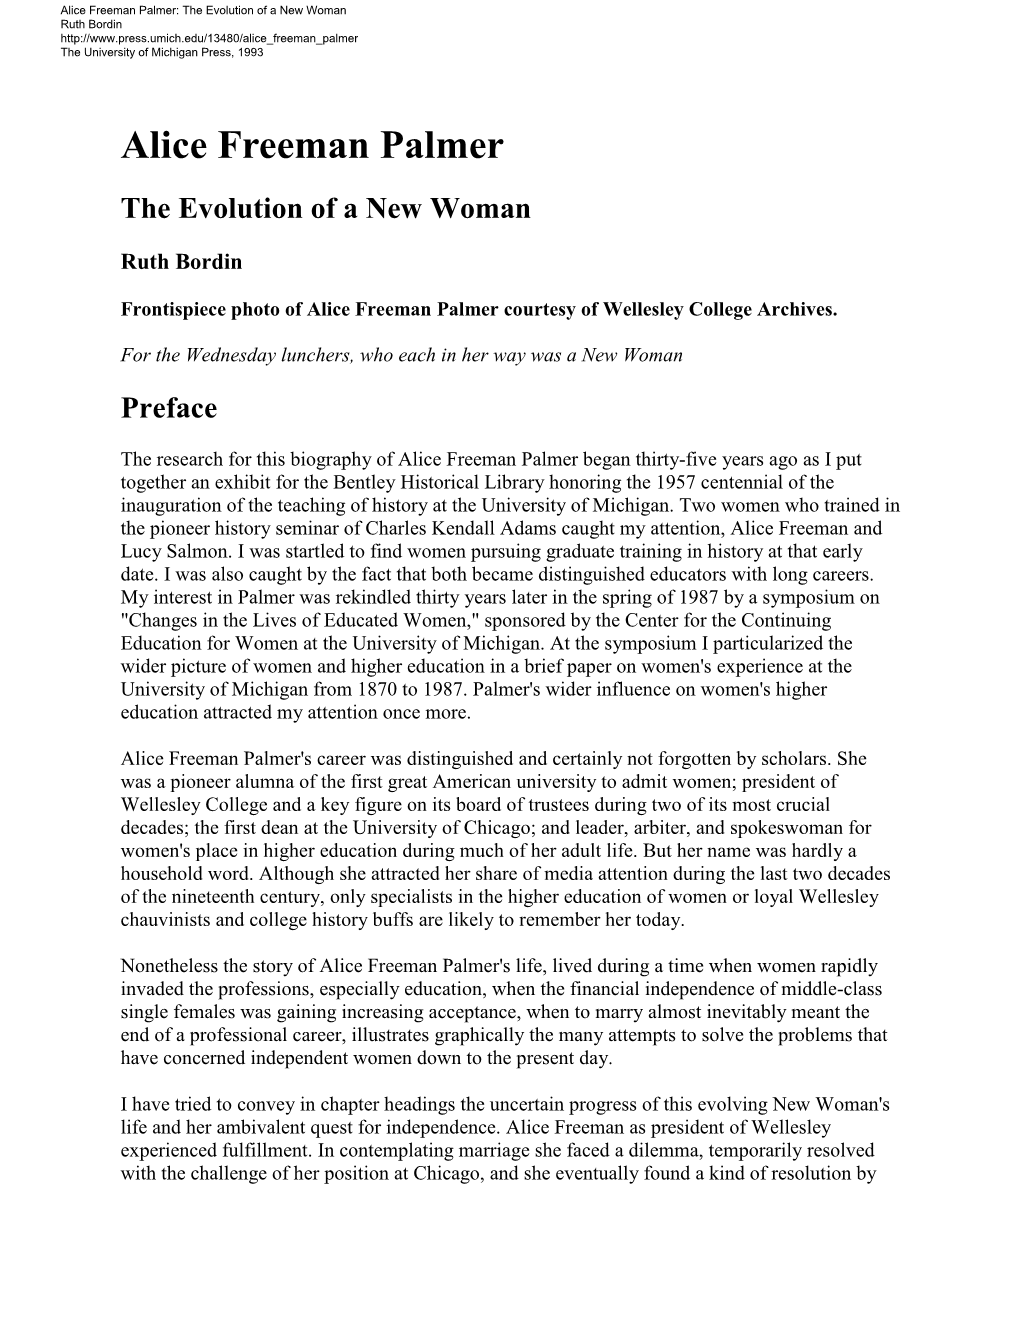 Alice Freeman Palmer: the Evolution of a New Woman Ruth Bordin the University of Michigan Press, 1993